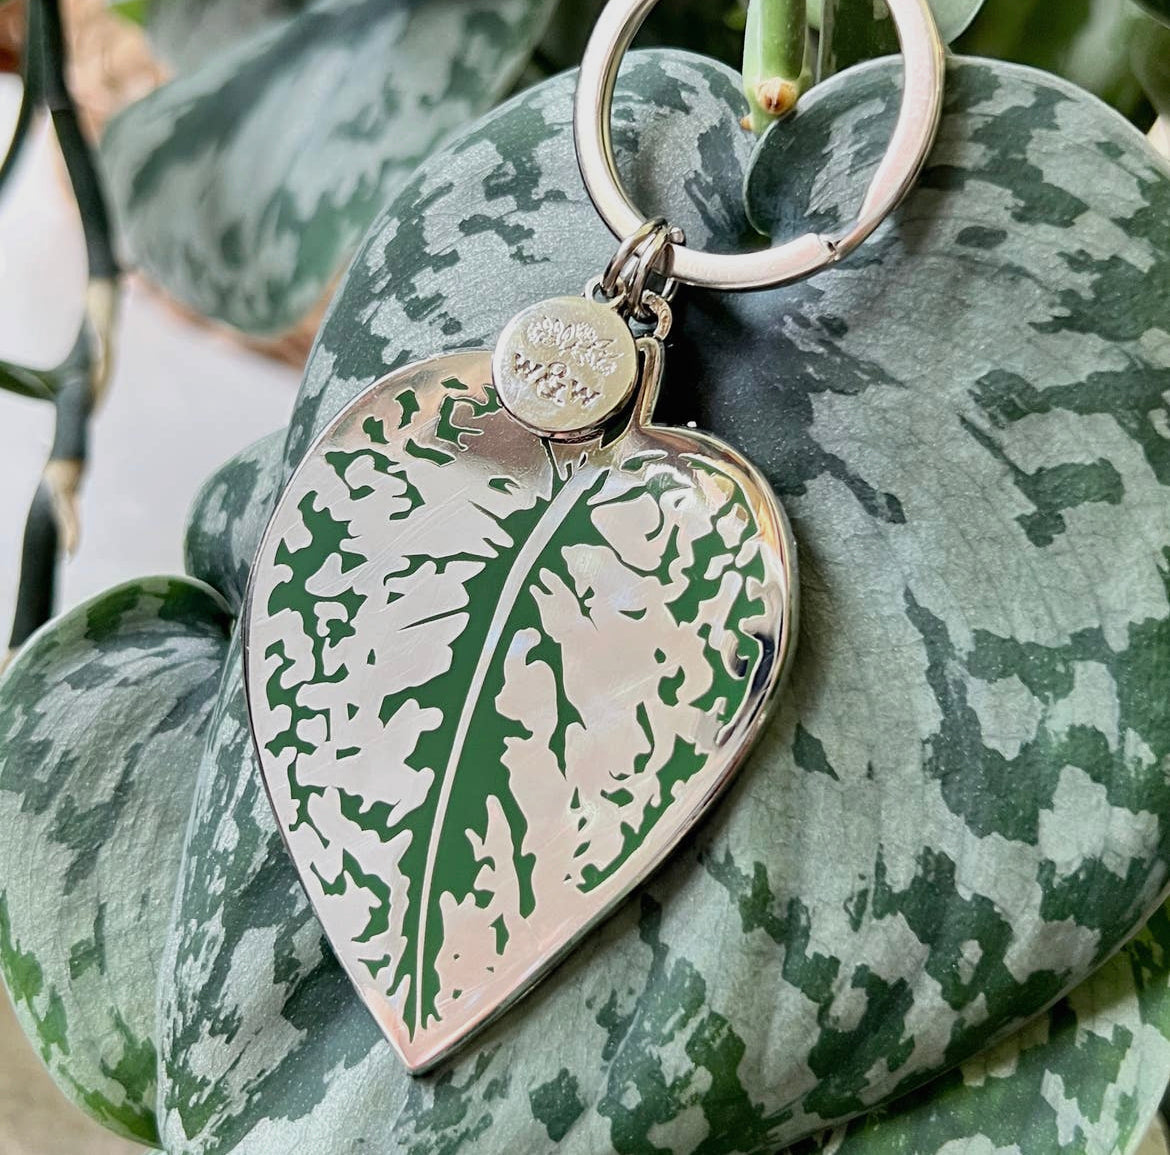 Scindapsus Pictus 'Exotica' Leaf houseplant keychain